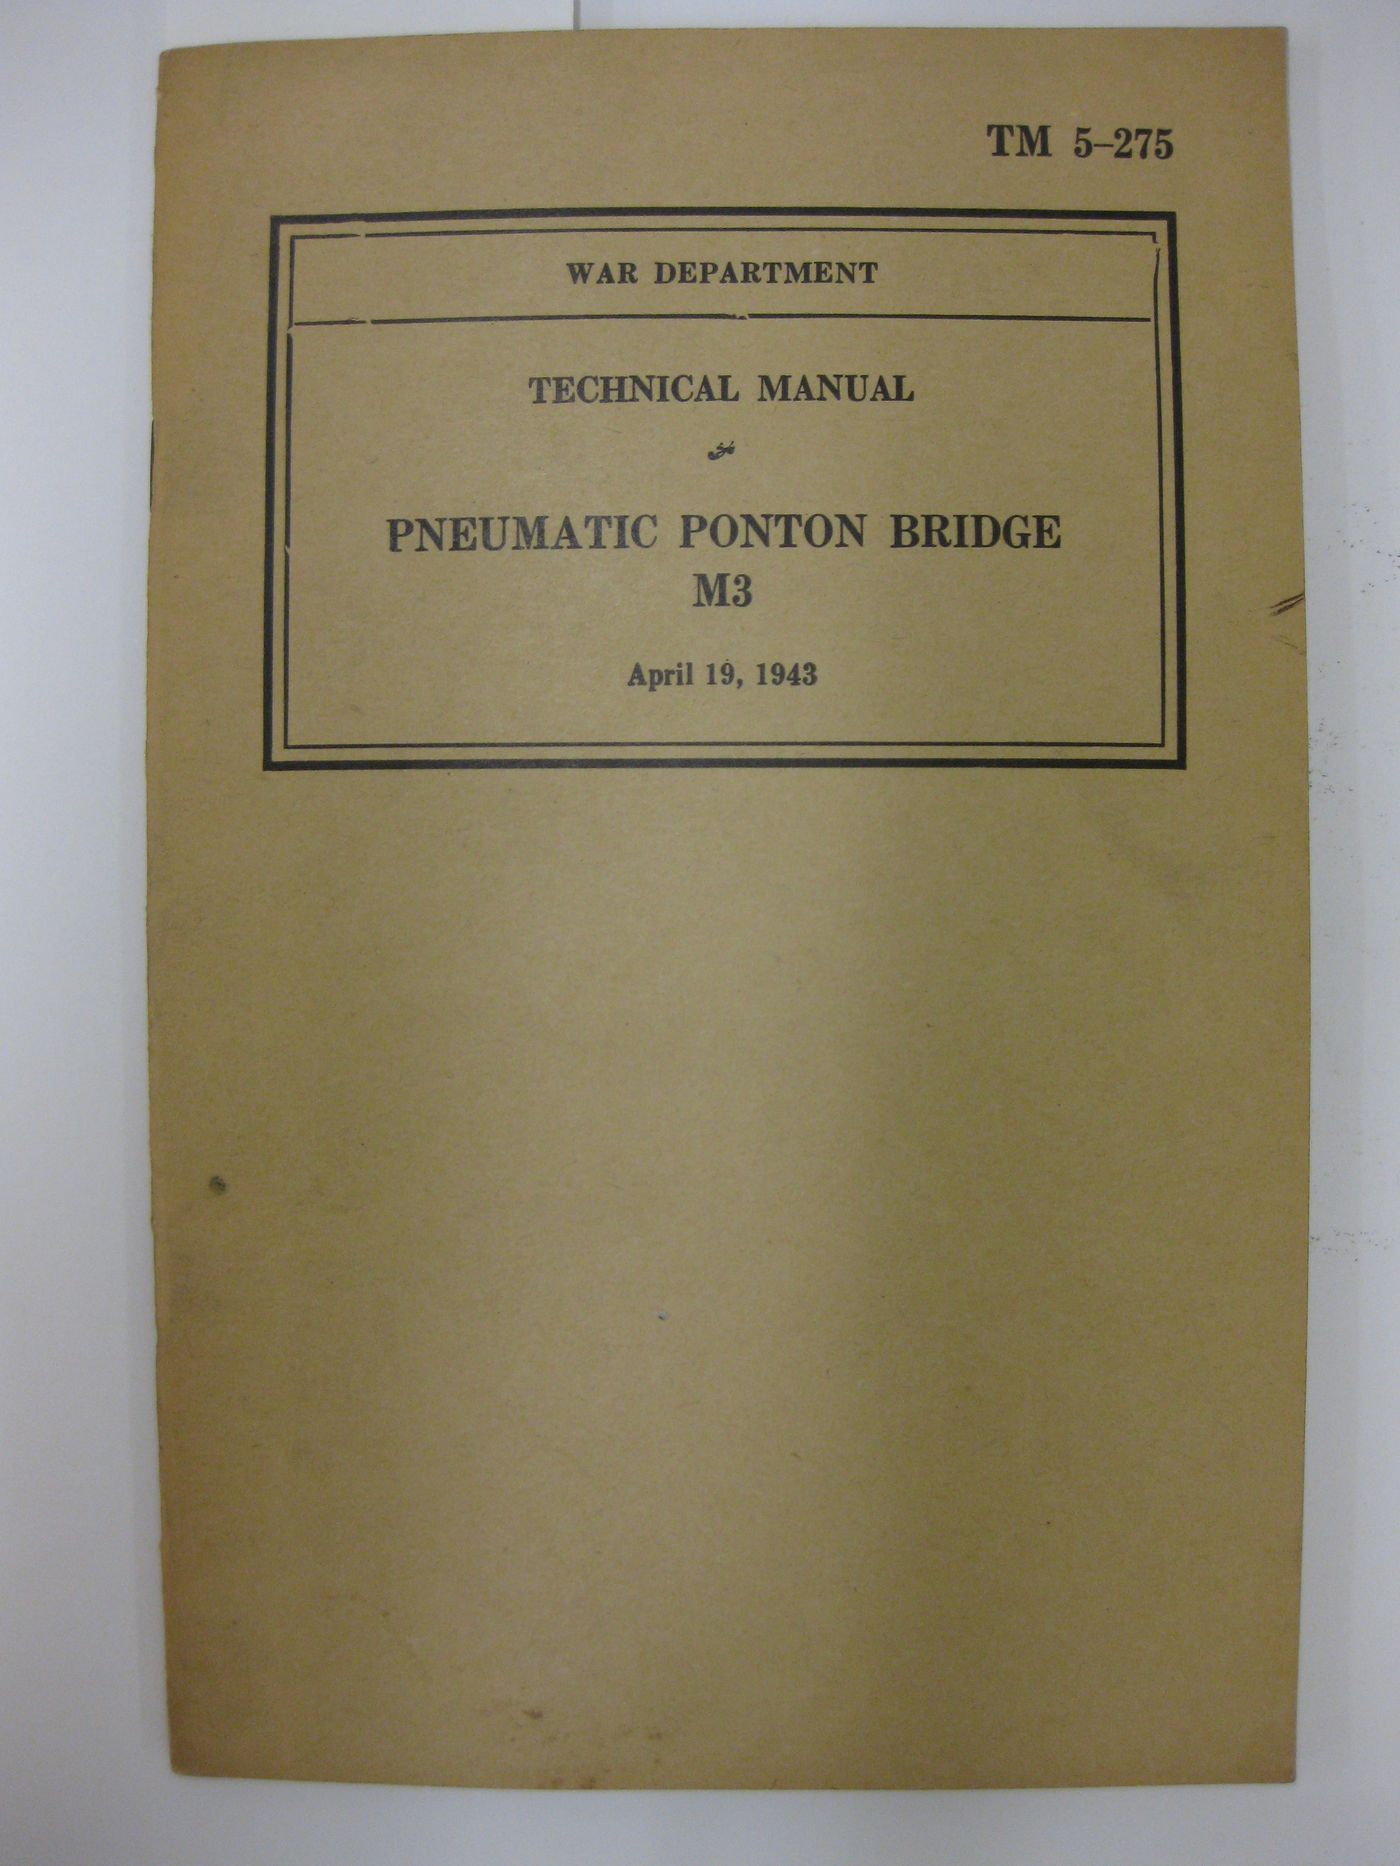 Pneumatic Ponton Bridge M3